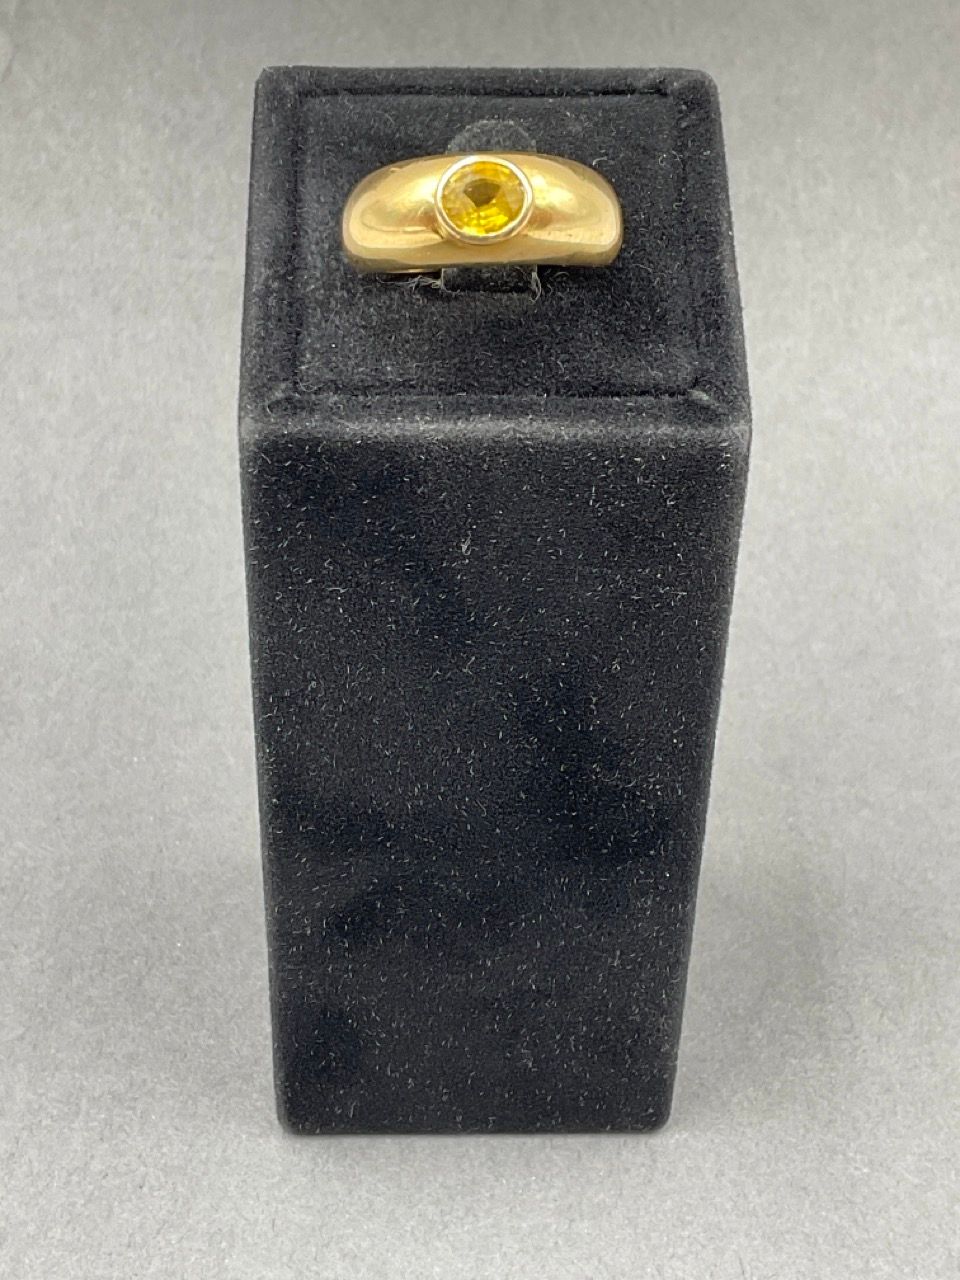 Null 18K黄金戒指，750/°°，镶嵌一颗椭圆形黄色蓝宝石（宝石可能经过处理），鹰头标志，TDD 54，重量：8.24g